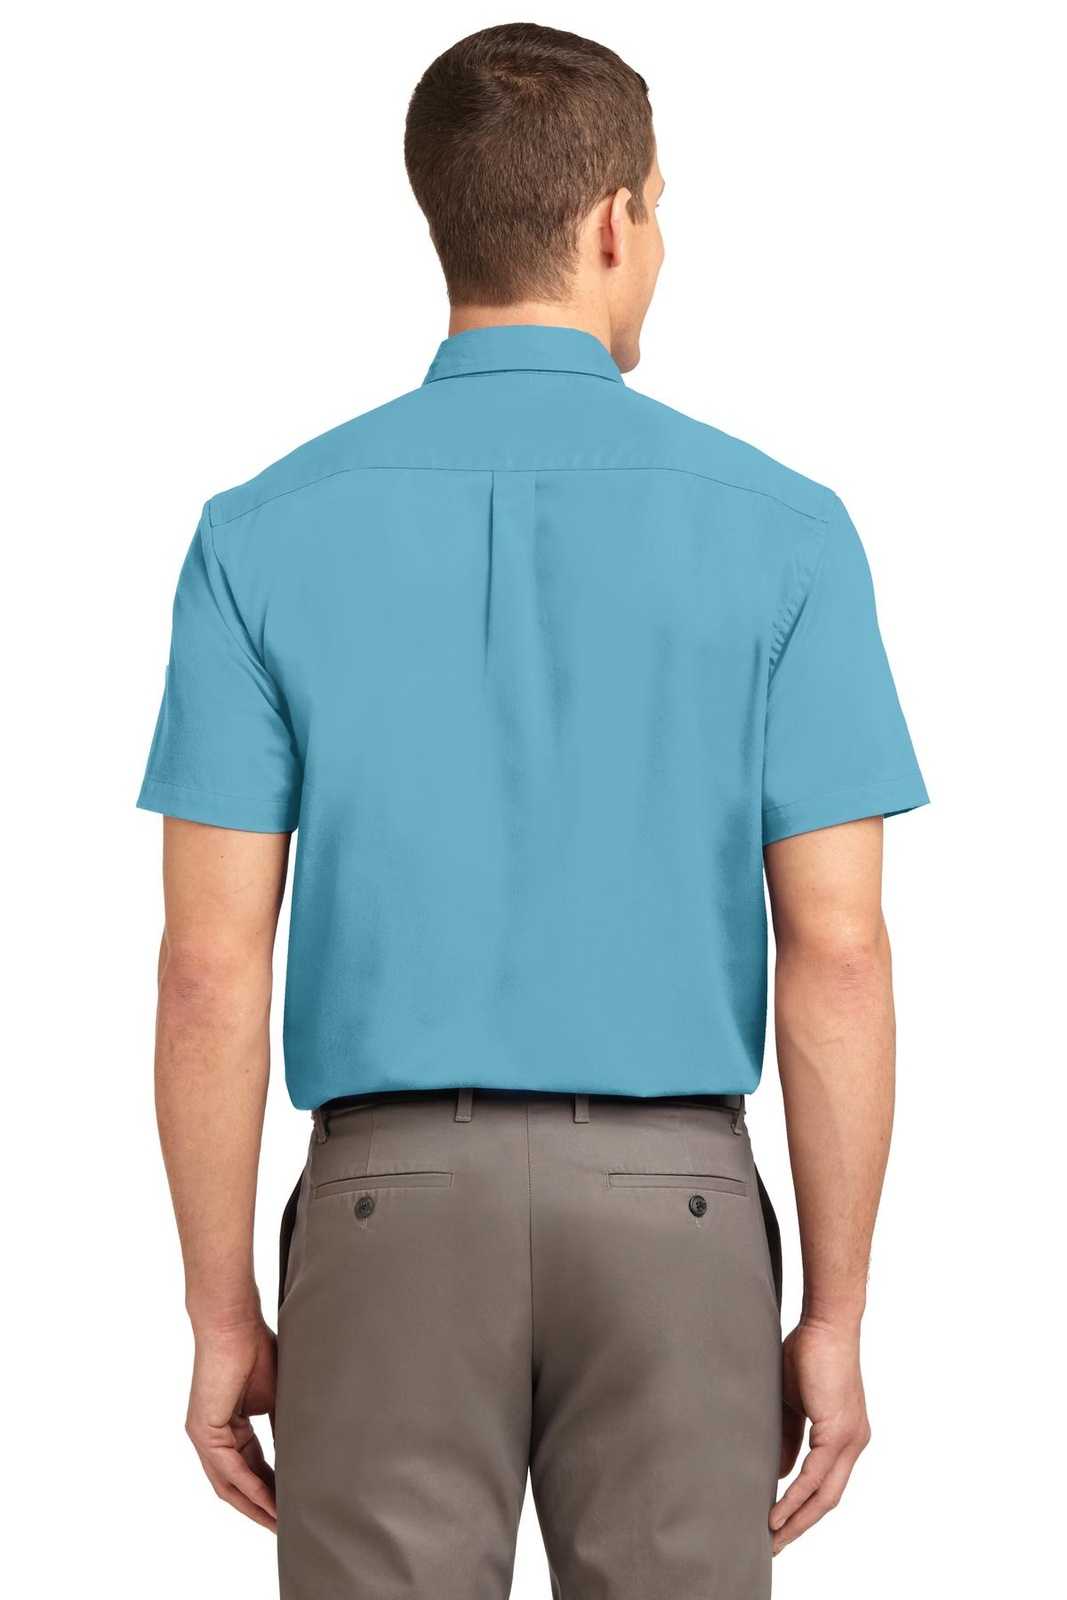 Port Authority S508 Short Sleeve Easy Care Shirt - Maui Blue - HIT a Double - 2